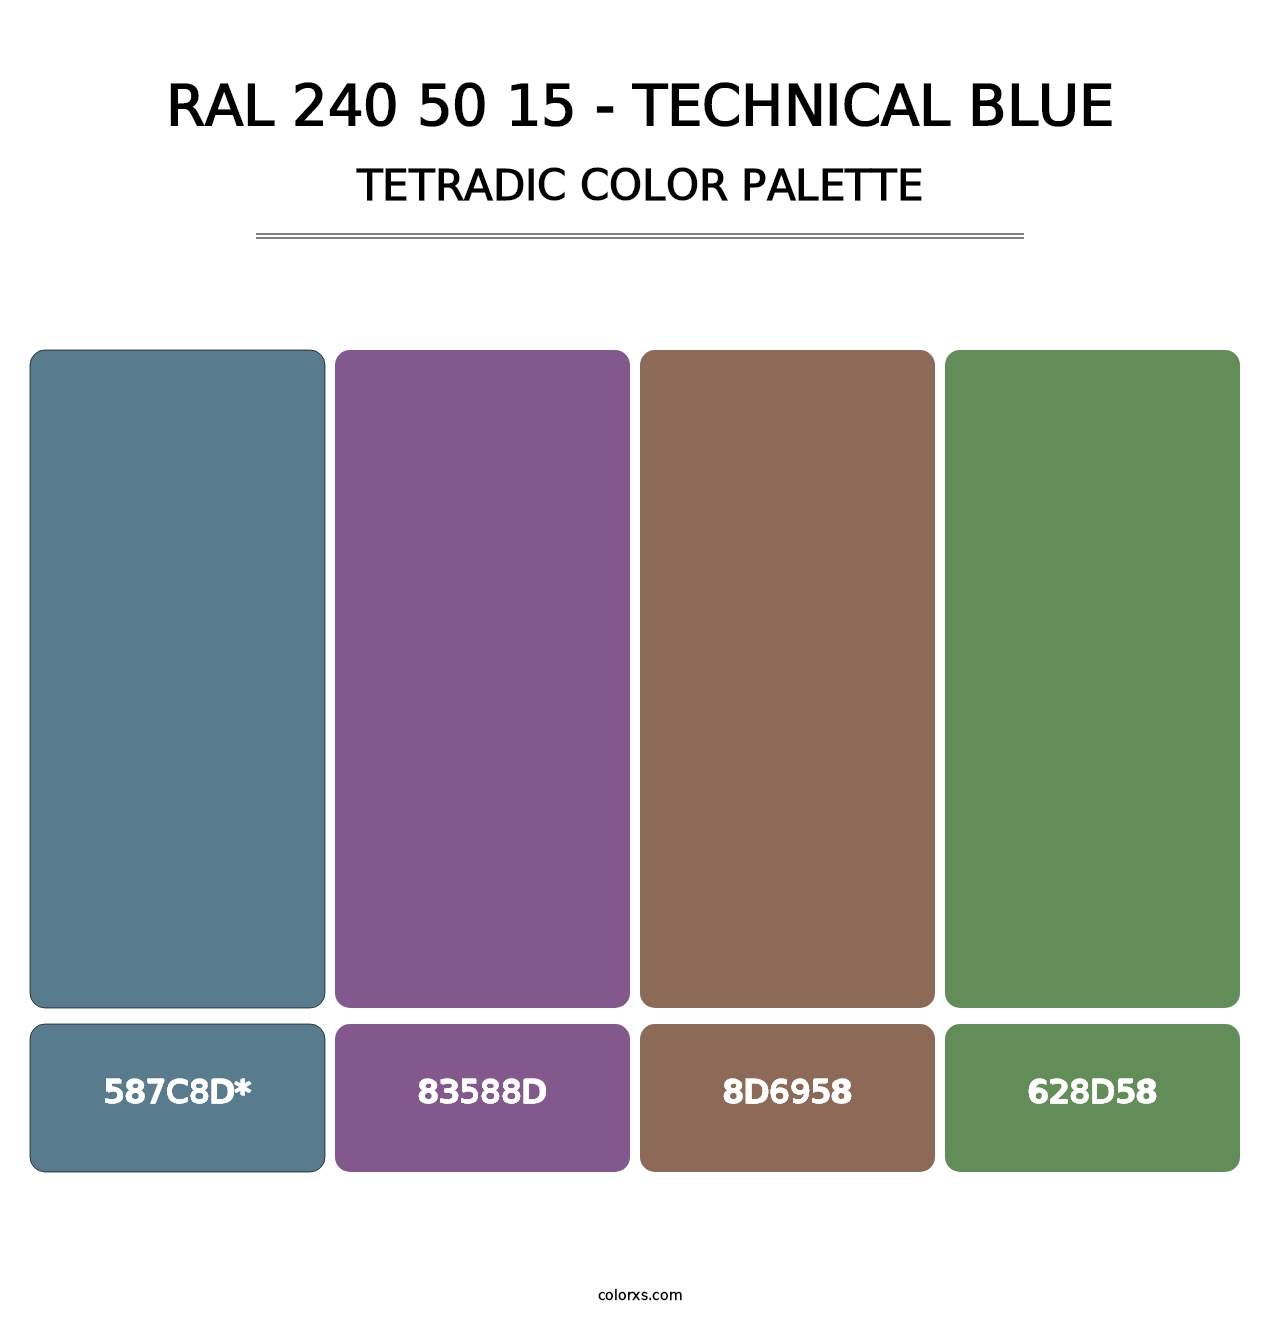 RAL 240 50 15 - Technical Blue - Tetradic Color Palette